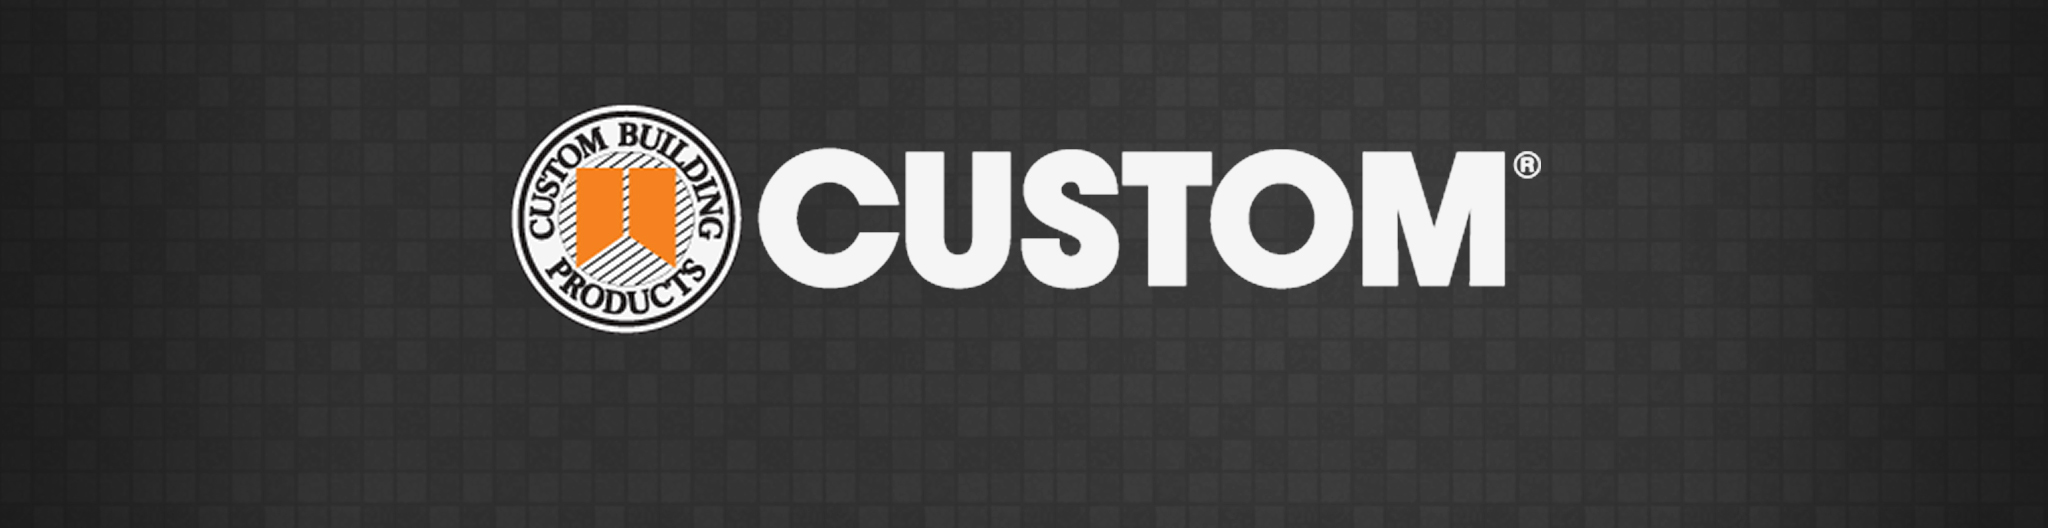 custom-builder-product-header